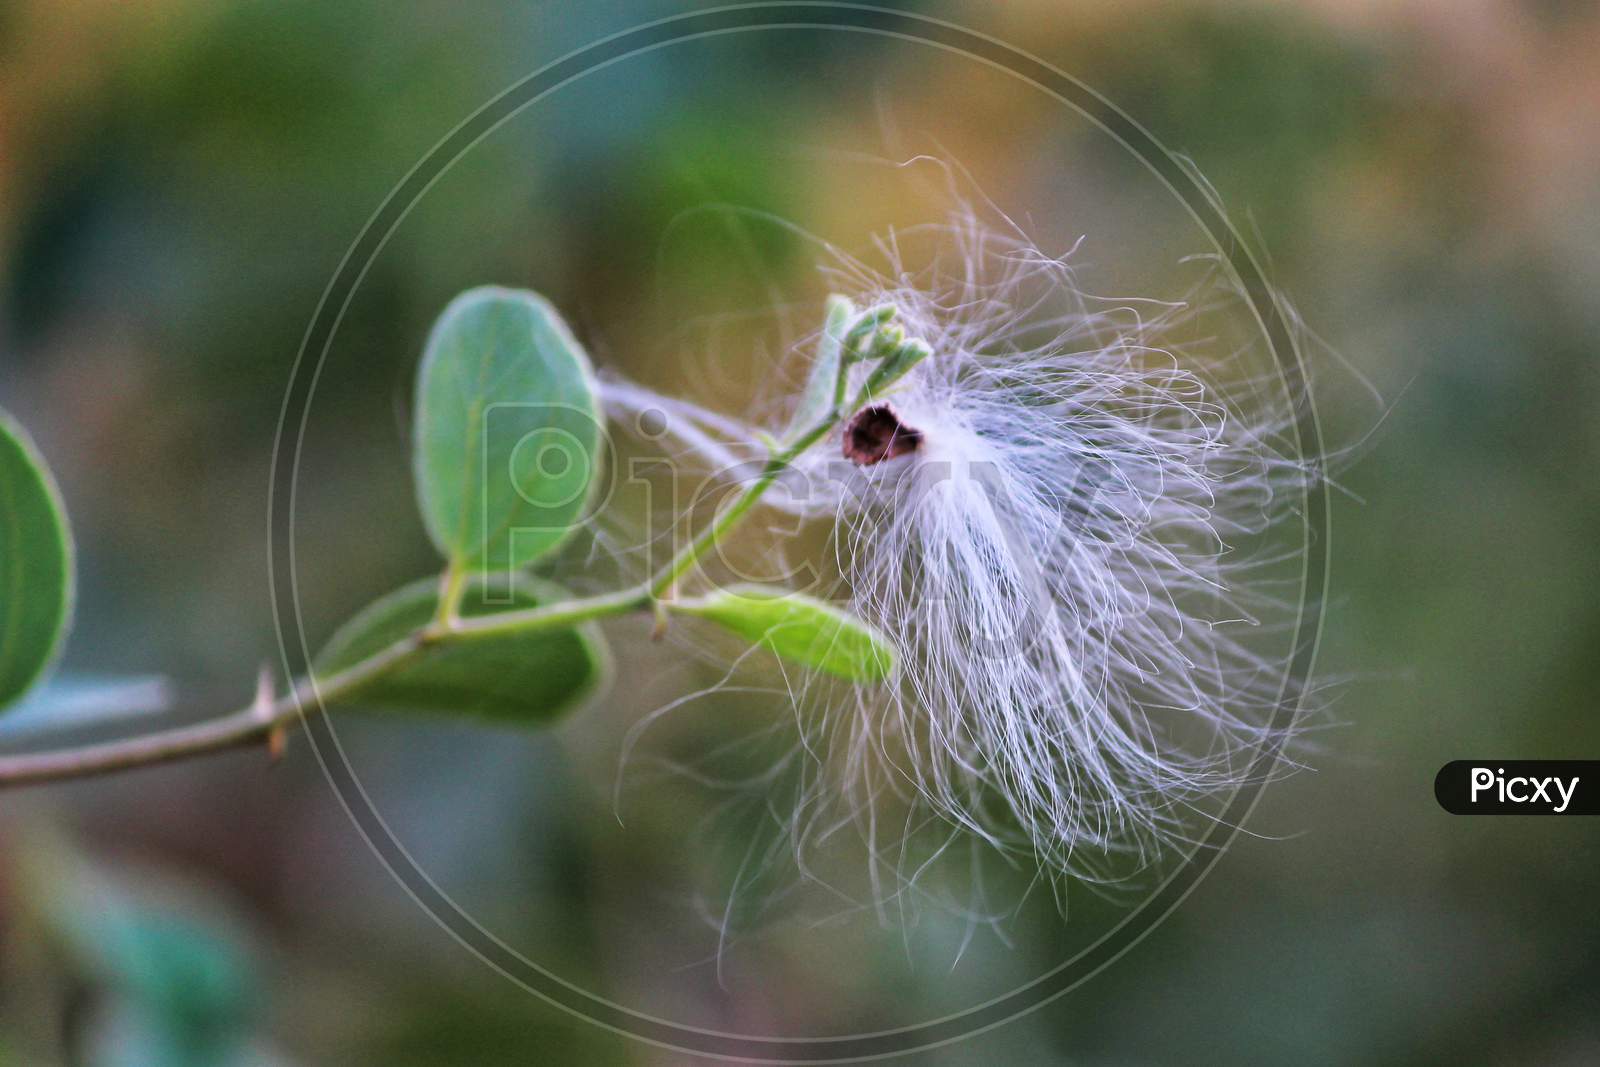 Eriophorum angustifolium, commonly known as common cottongrass